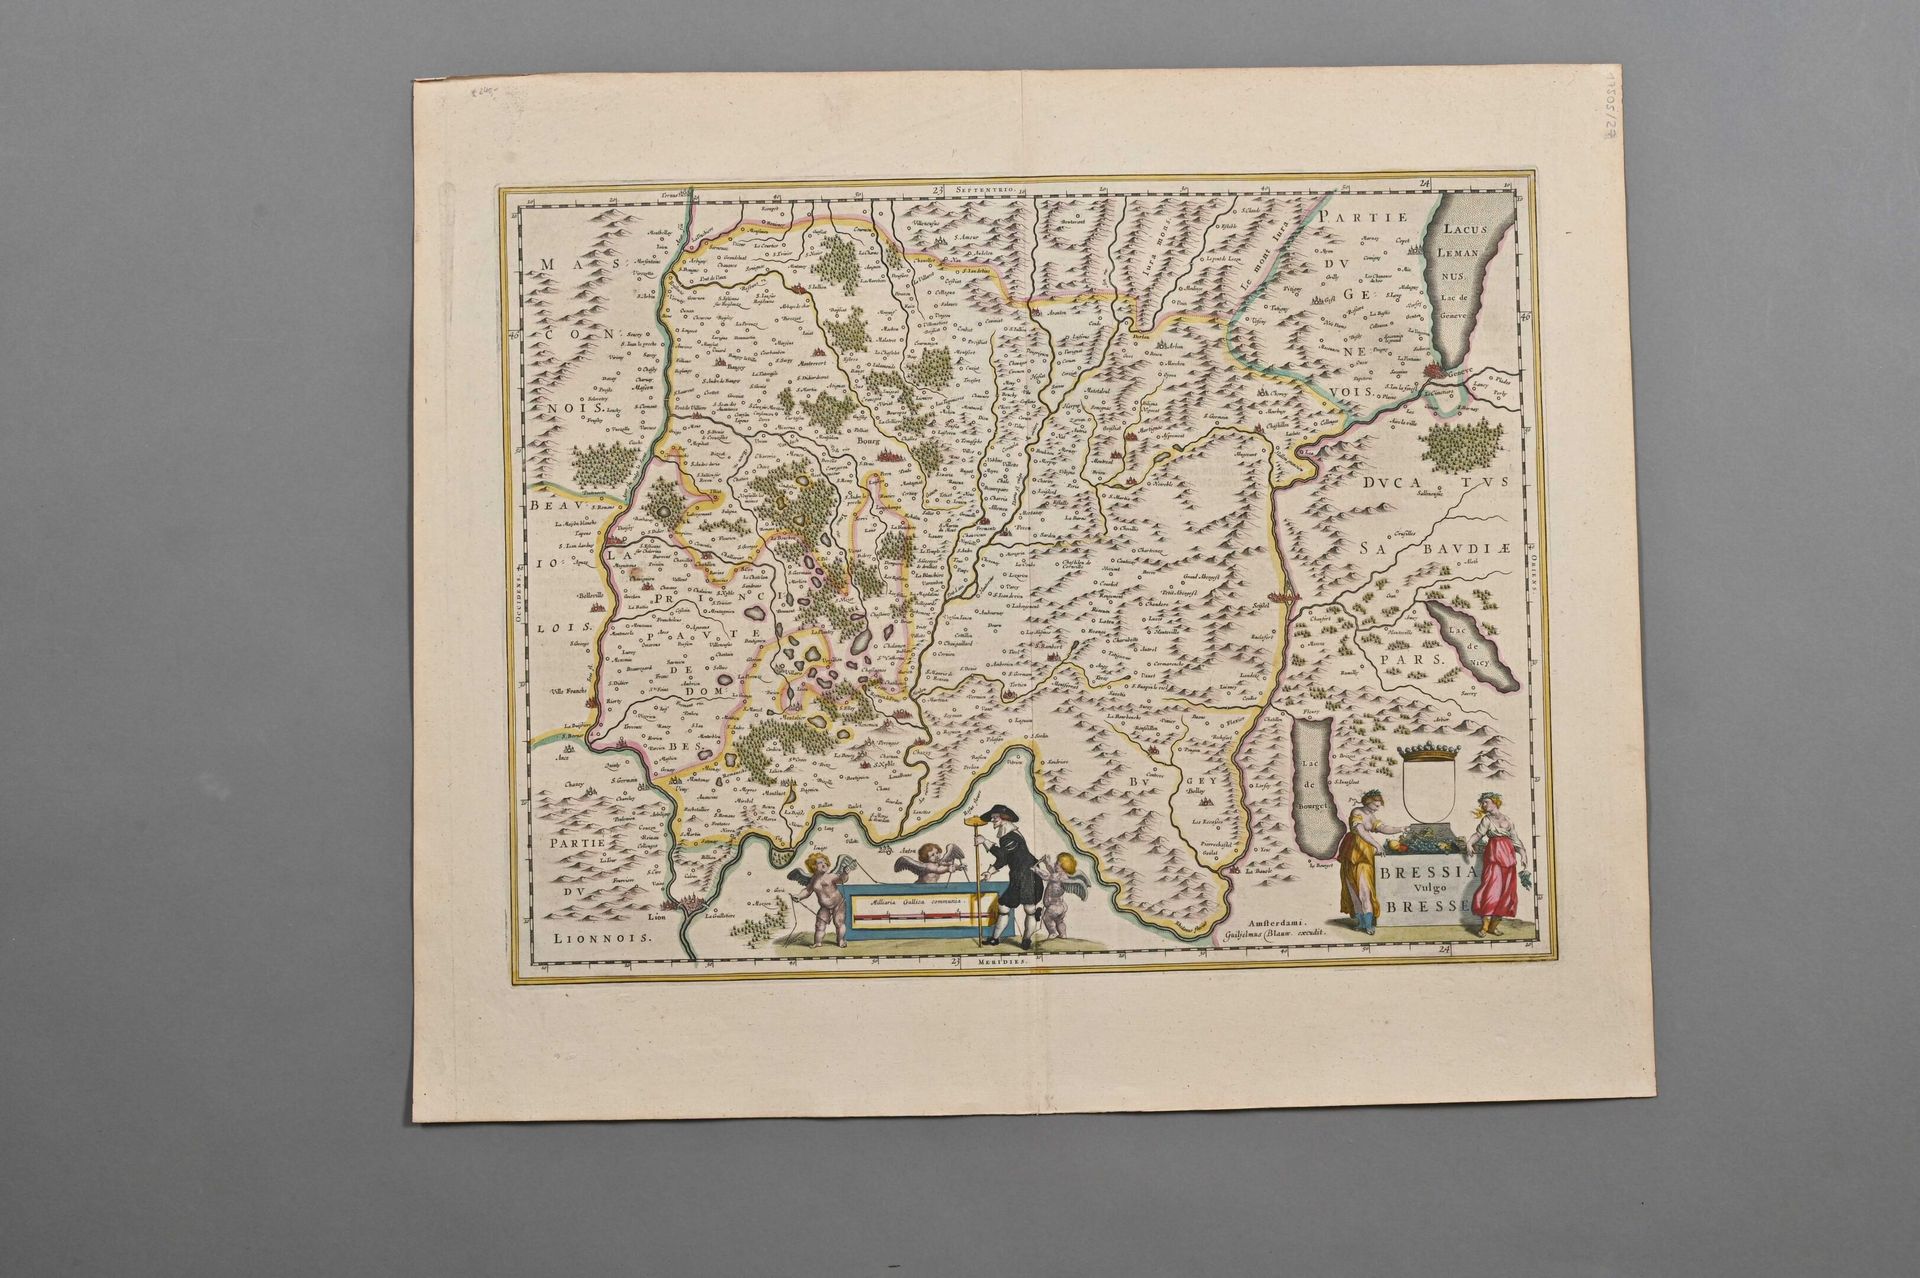 Null 布雷泽 - 布劳尔地图 第十七世纪

德国版纸上的样张。

后来上色。

纸张：50 x 59厘米。交流